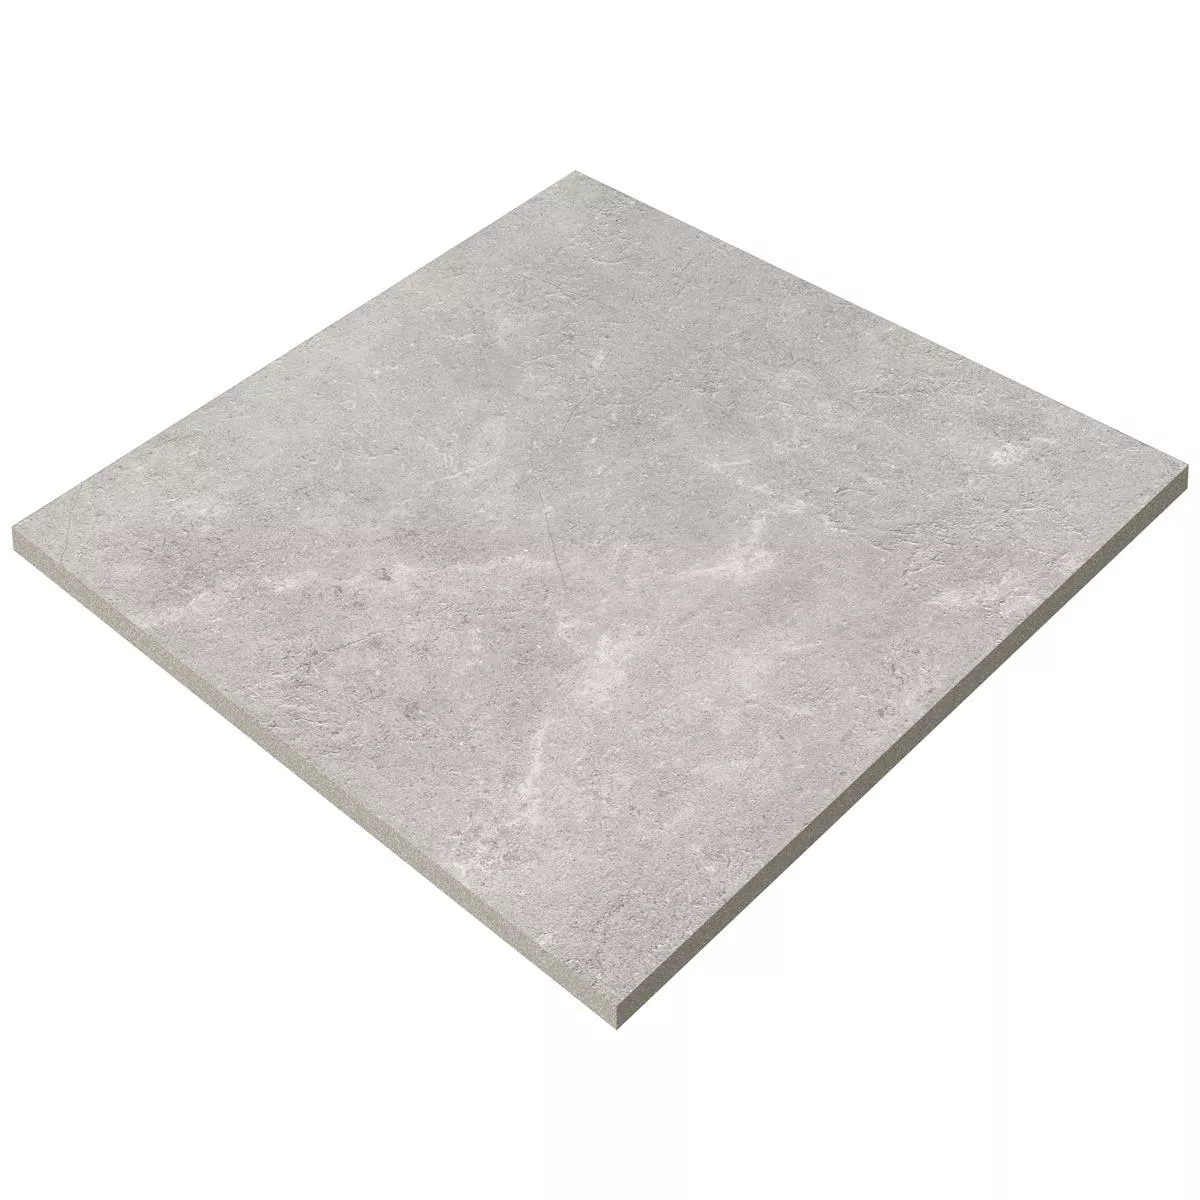 Sample Floor Tiles Bangui Stone Optic 60x60cm Silver